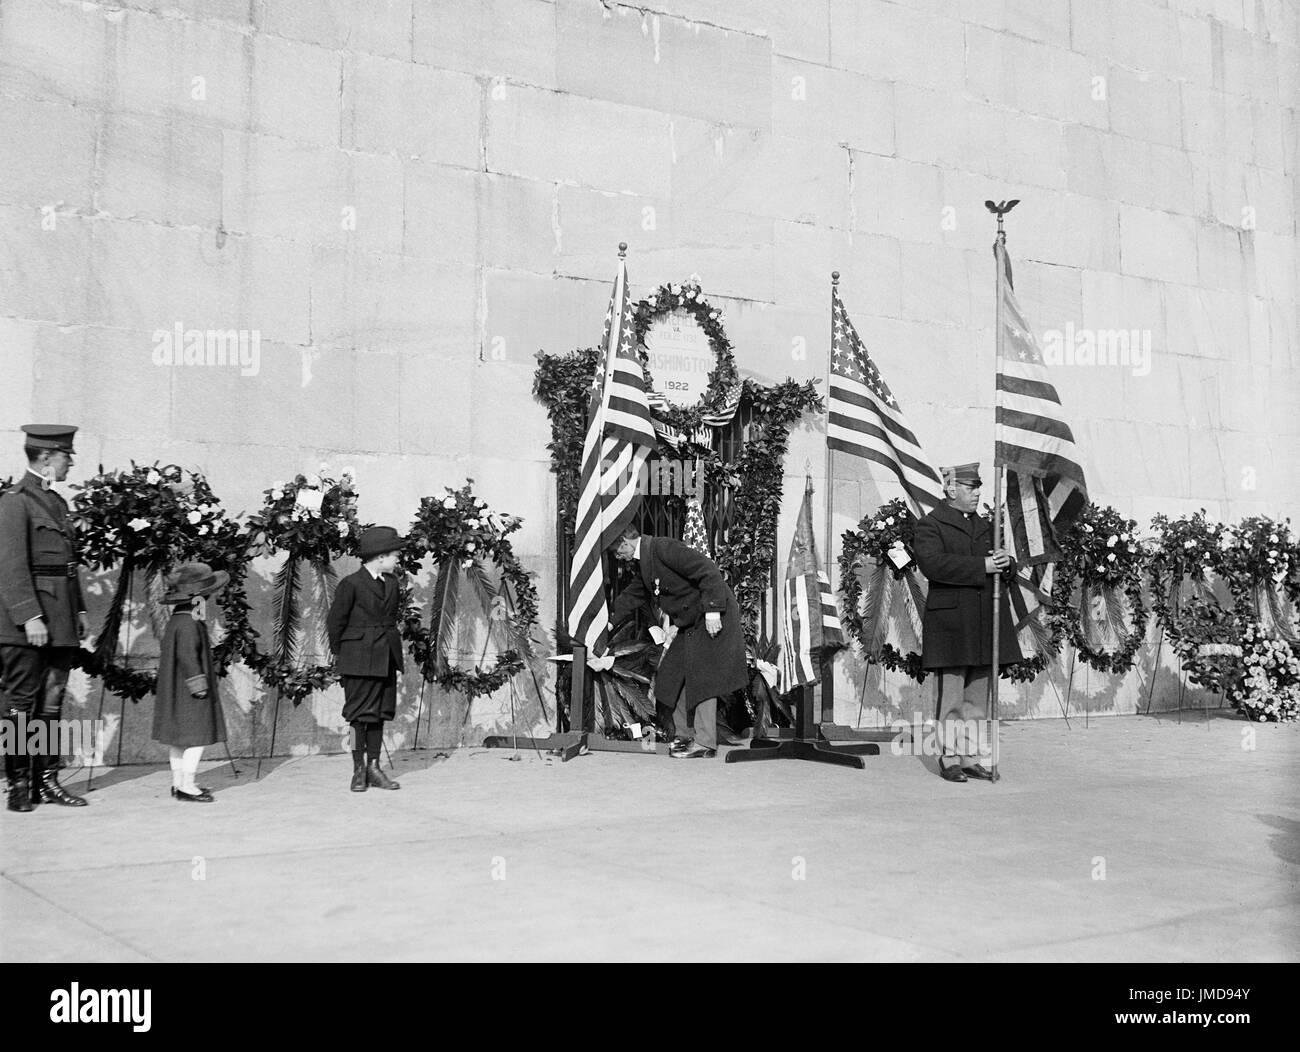 George Washington Birthday Ceremony, Washington Memorial, Washington DC, USA, Harris & Ewing, February 22, 1922 Stock Photo